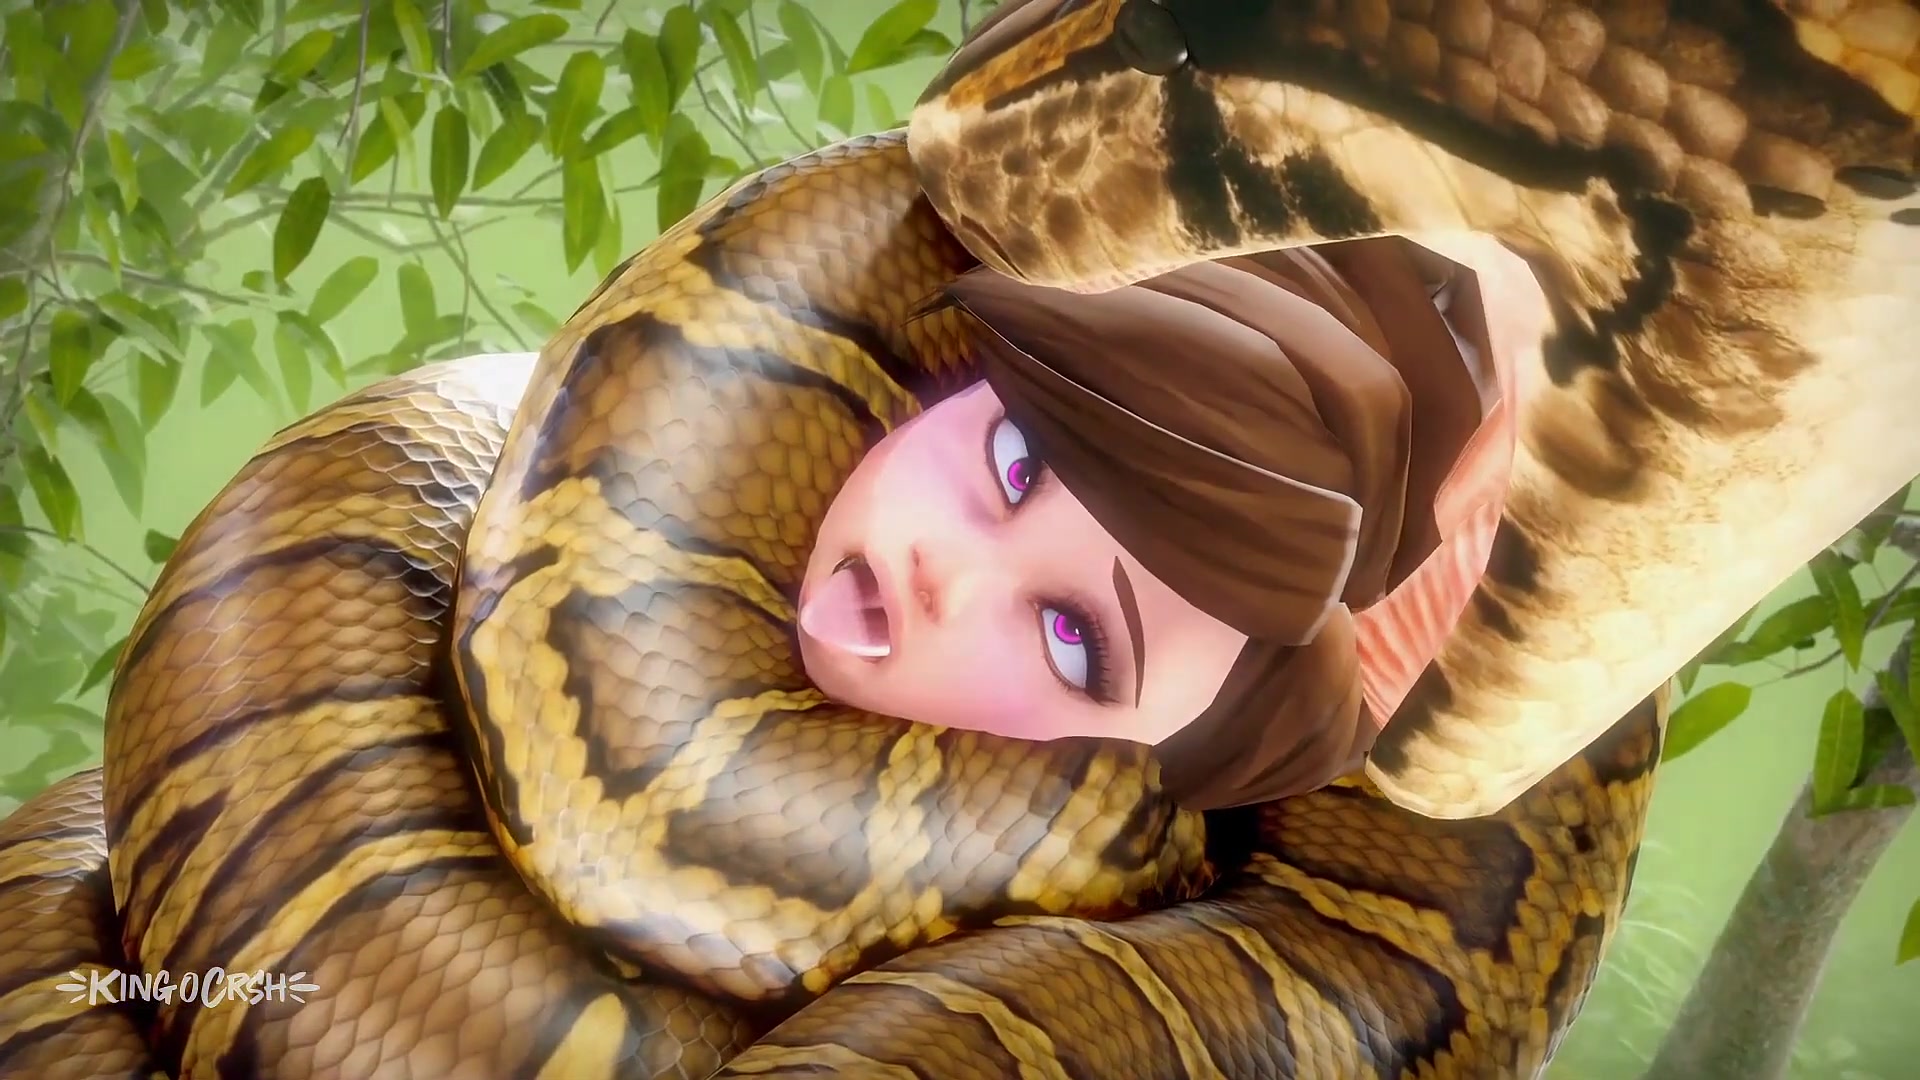 Snake Vore Porn - Snake constricting before vore. *king o crsh - ThisVid.com